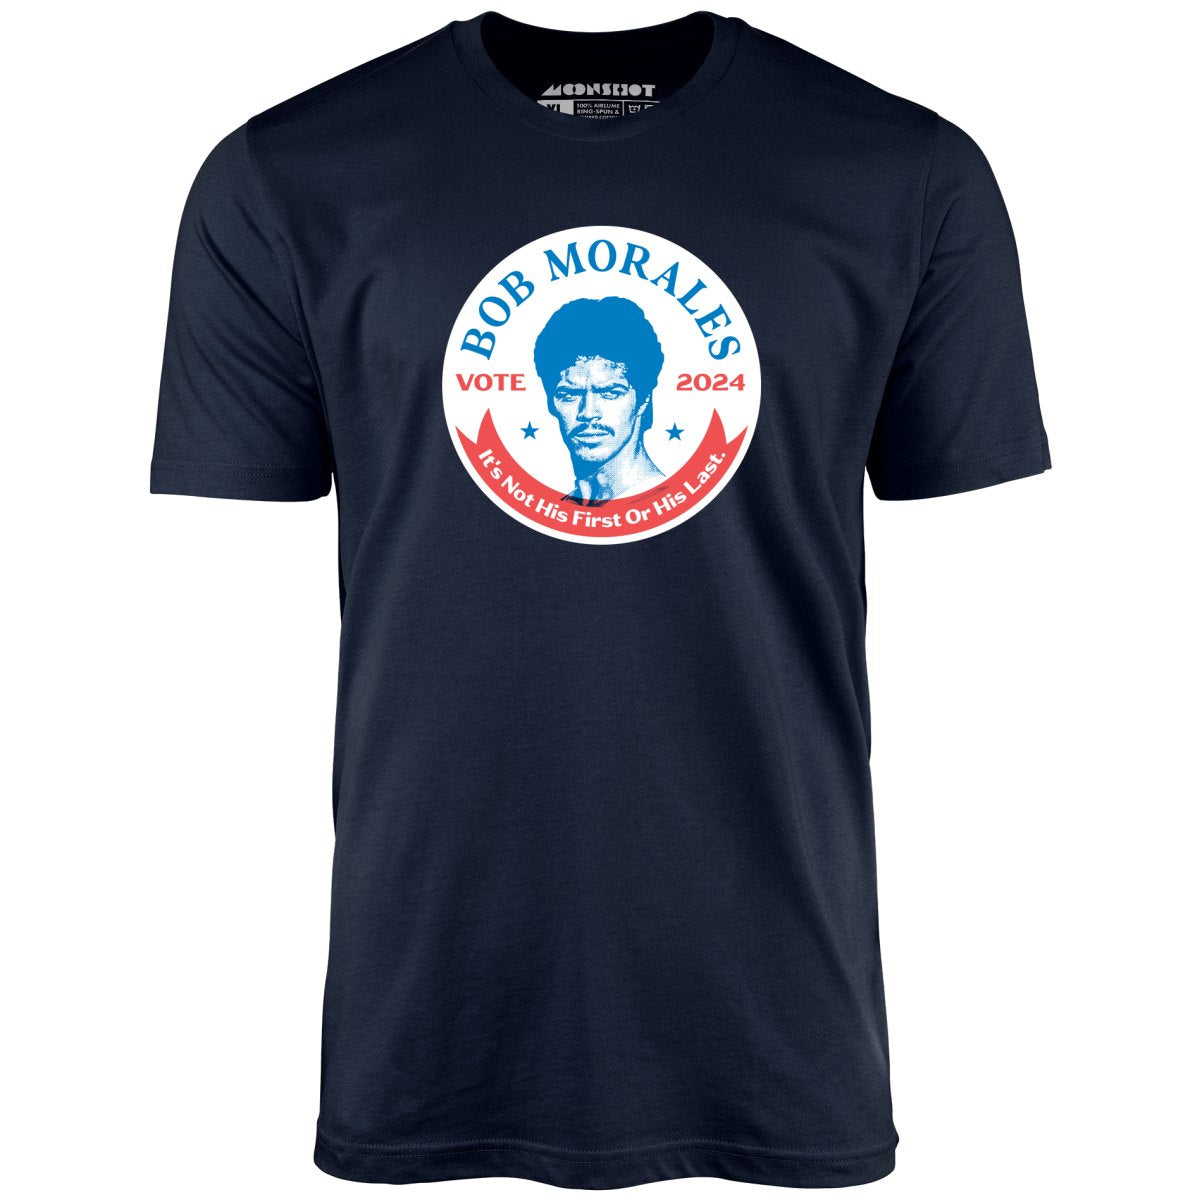 Bob Morales 2024 - Unisex T-Shirt